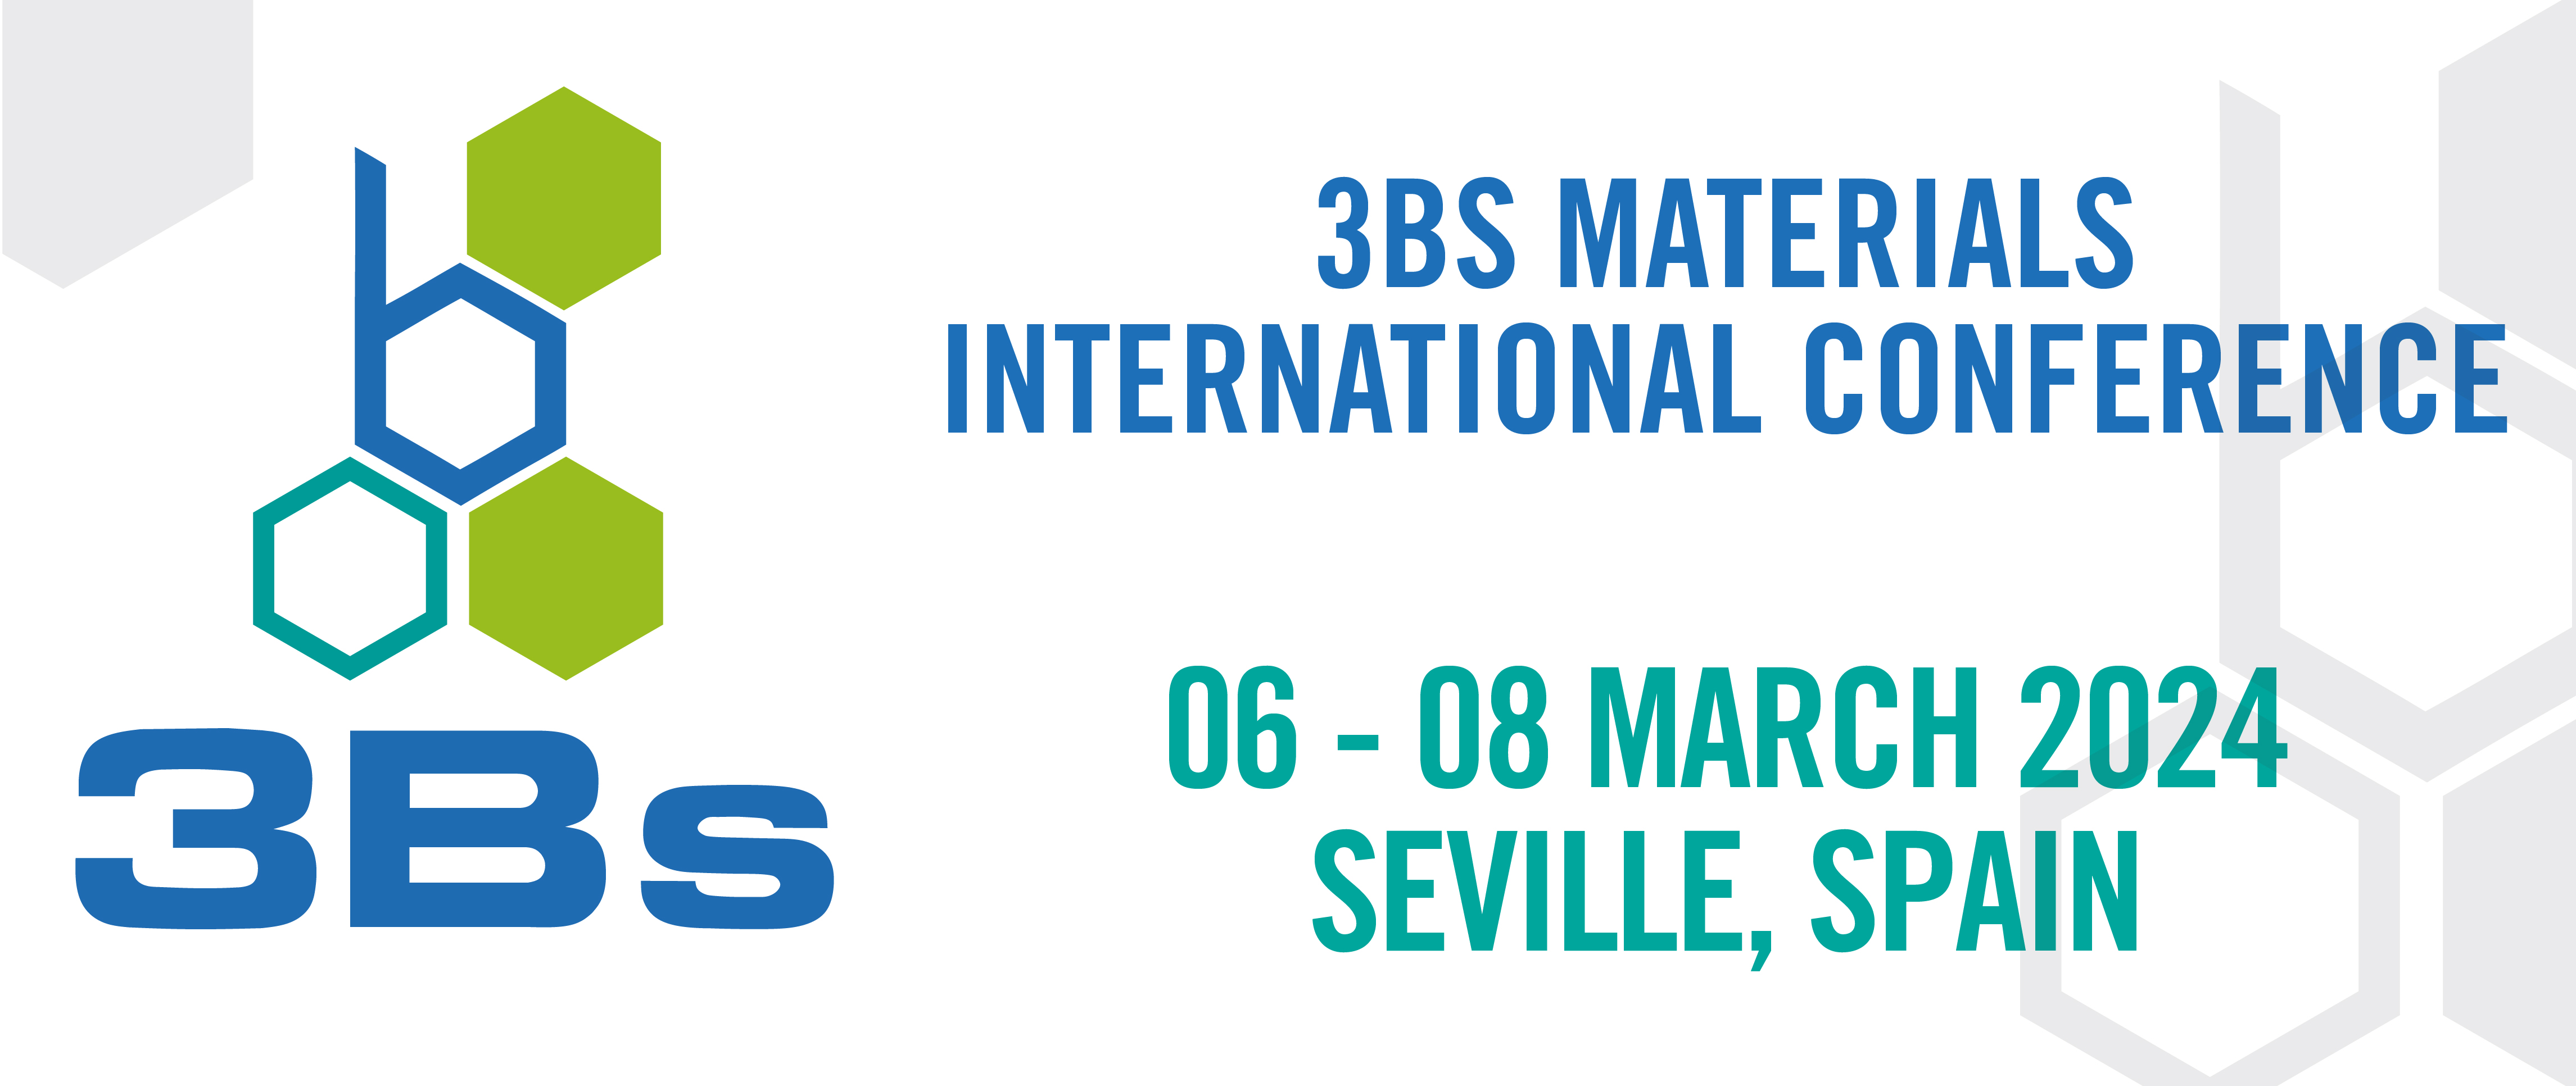 Biomaterials, Biodegradables and Biomimetics International Conference - 3Bs Materials 2024